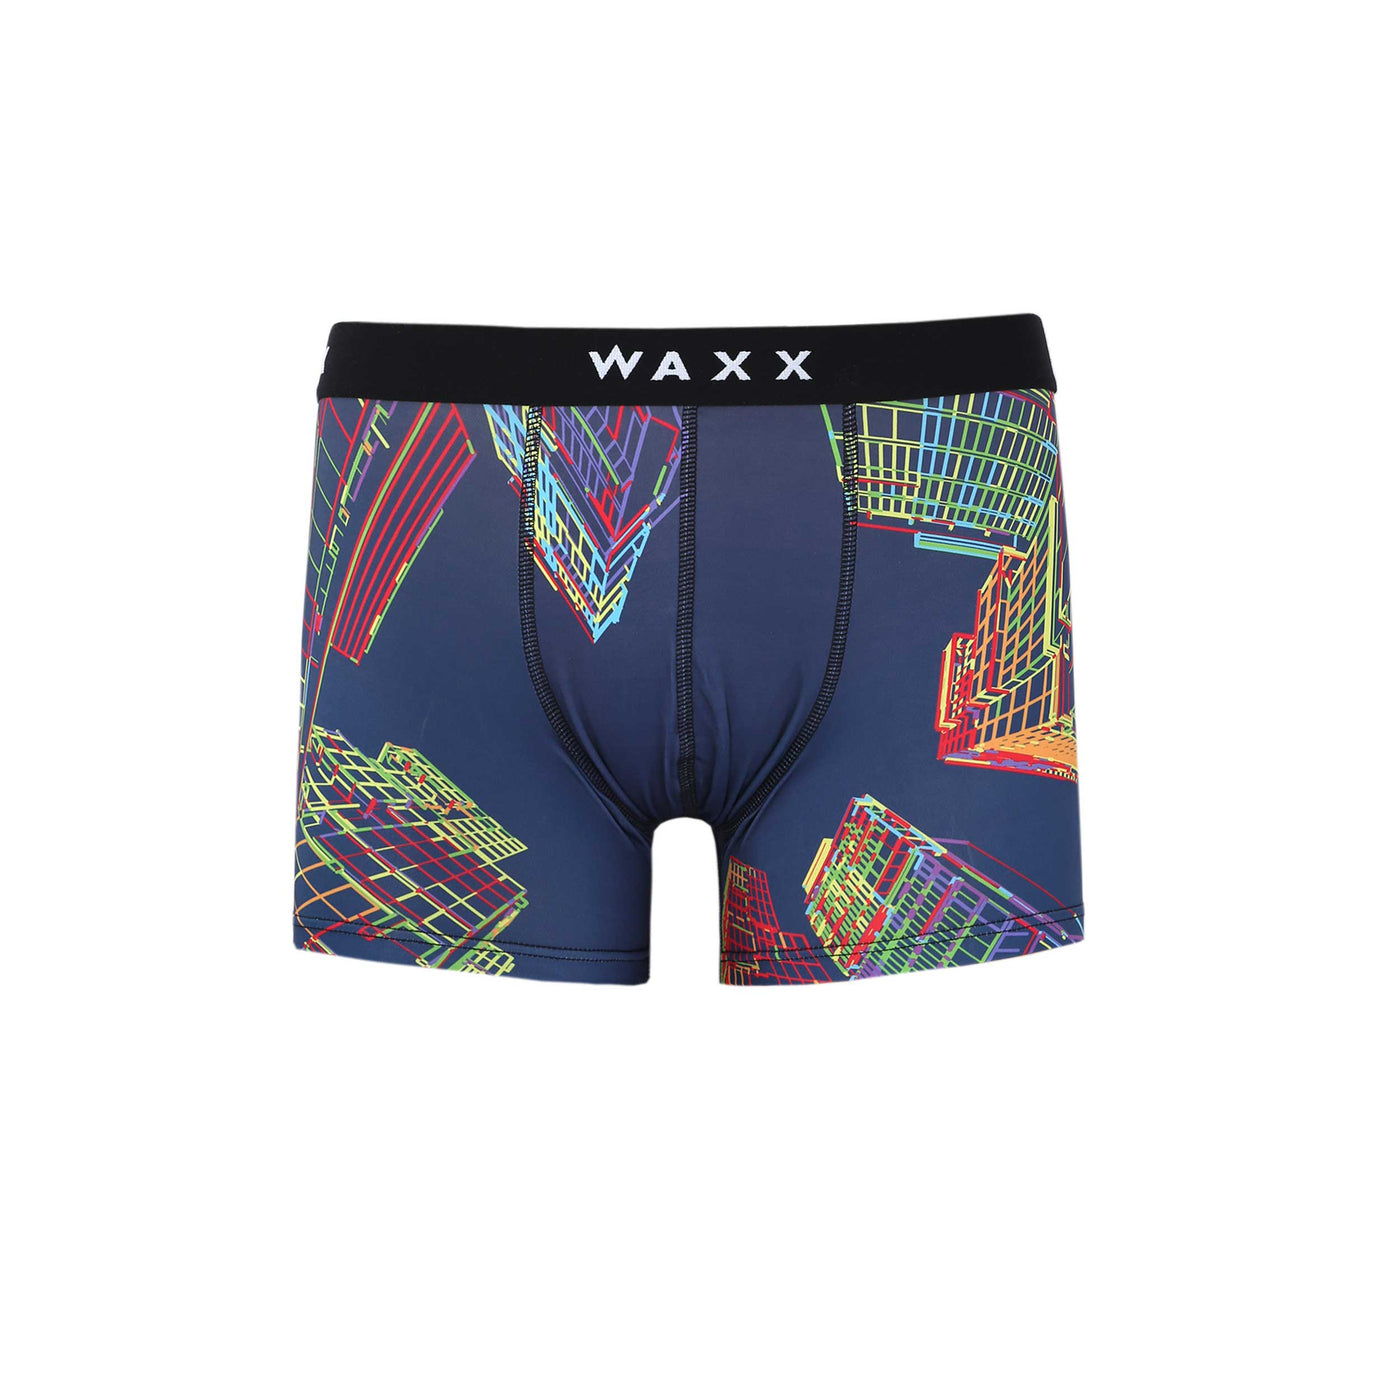 Waxx Building Boxer Short in Black